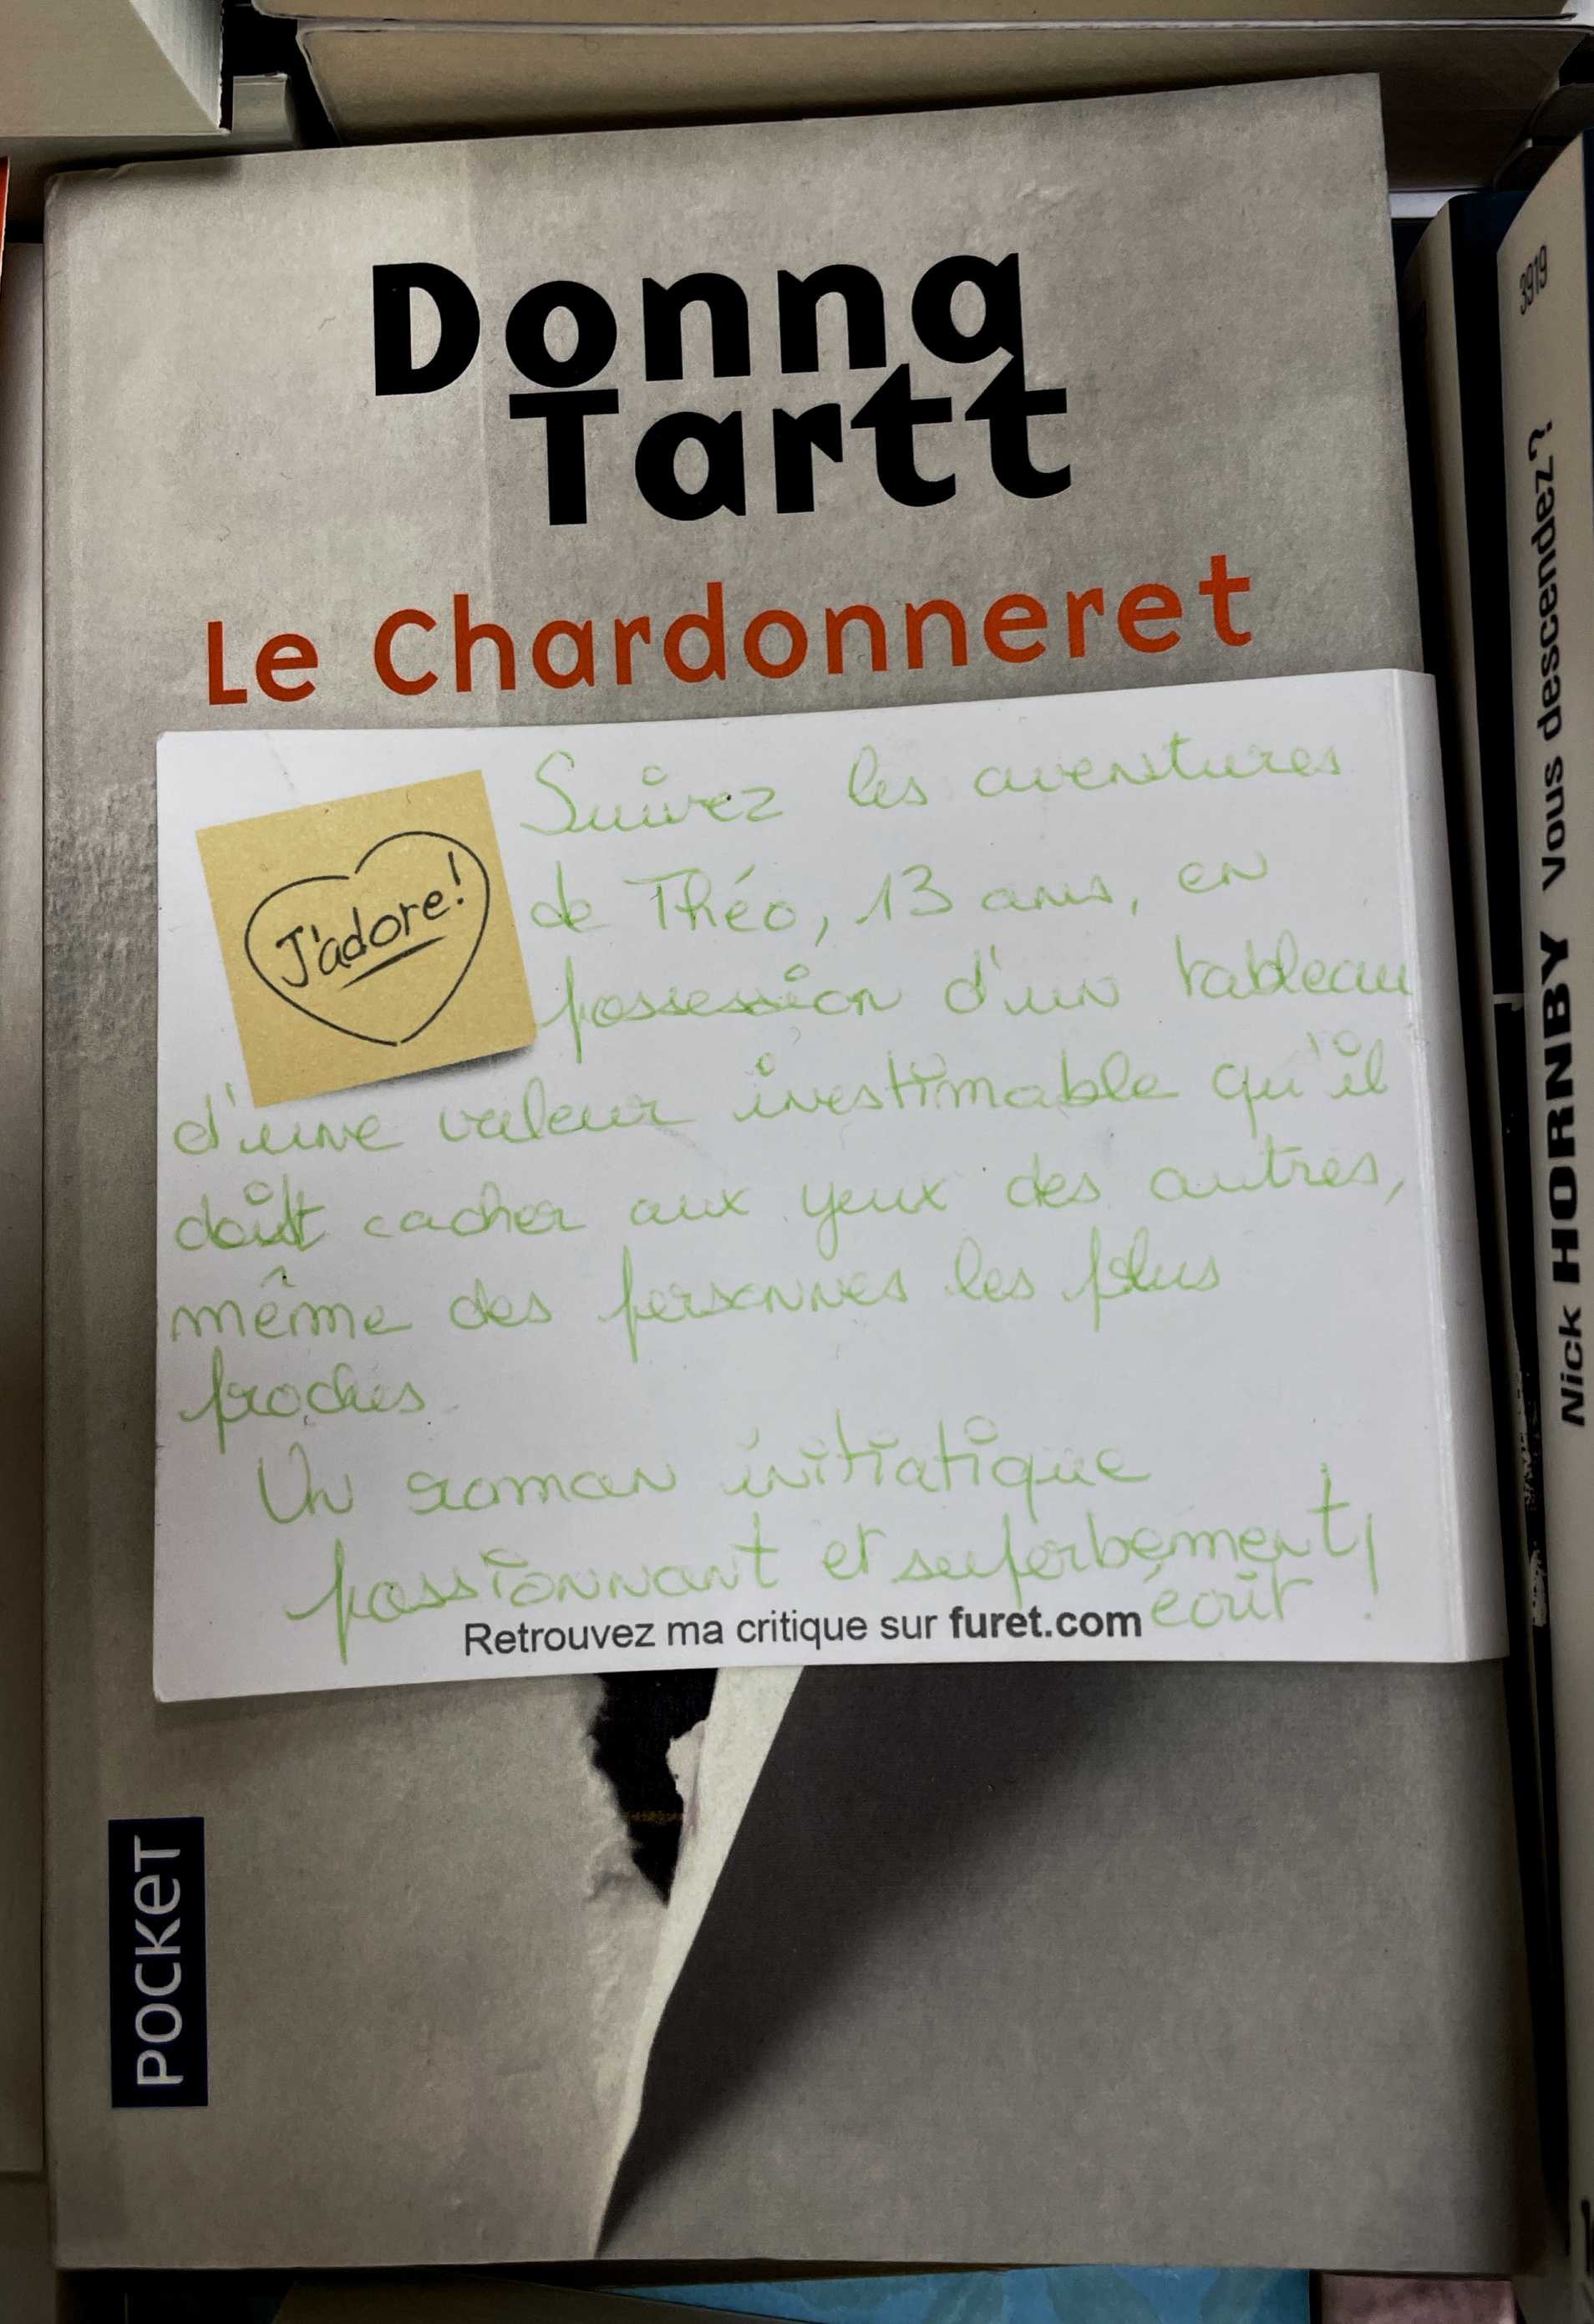 Donna Tartt, Le chardonneret